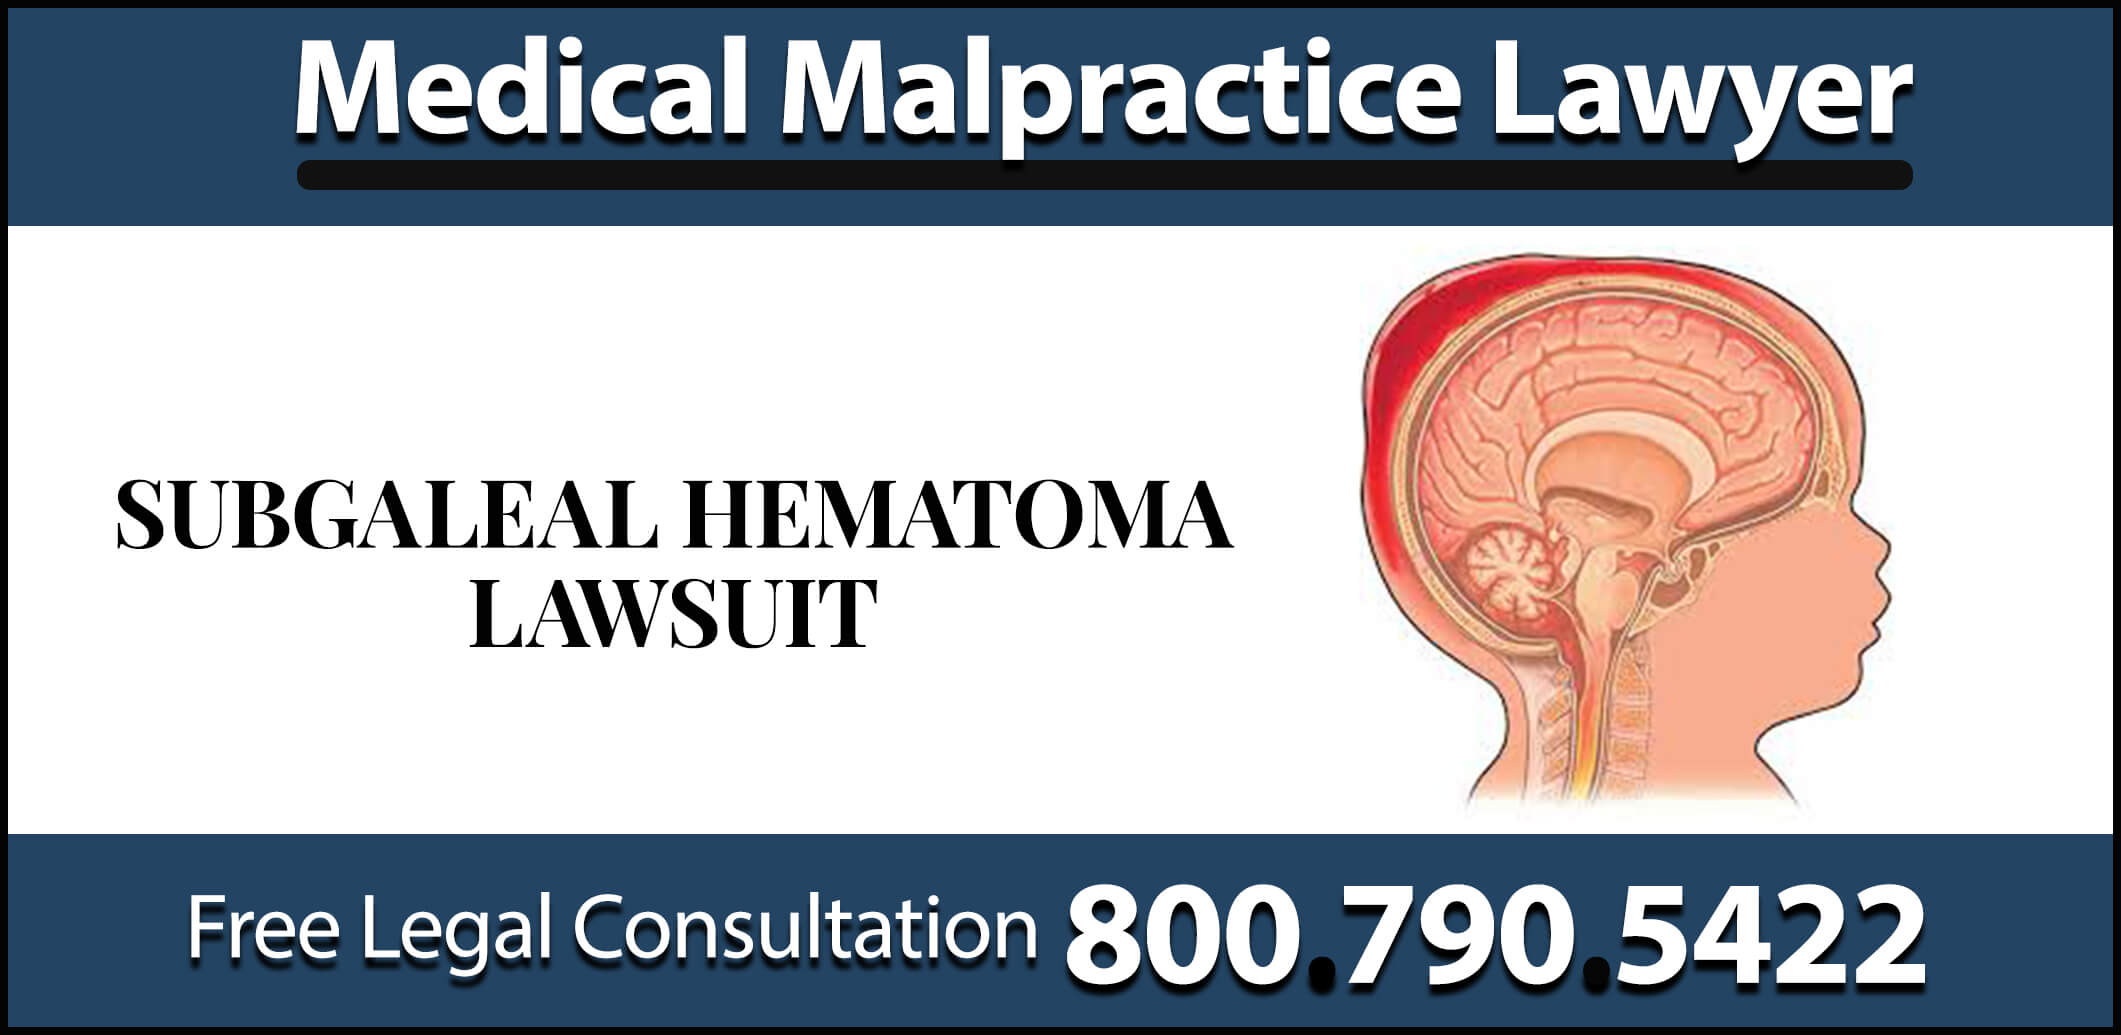 subgaleal hematoma lawsuit medical malpractice lawyer attorney sue compensation liability blood clot seizure brain damage compensation sue